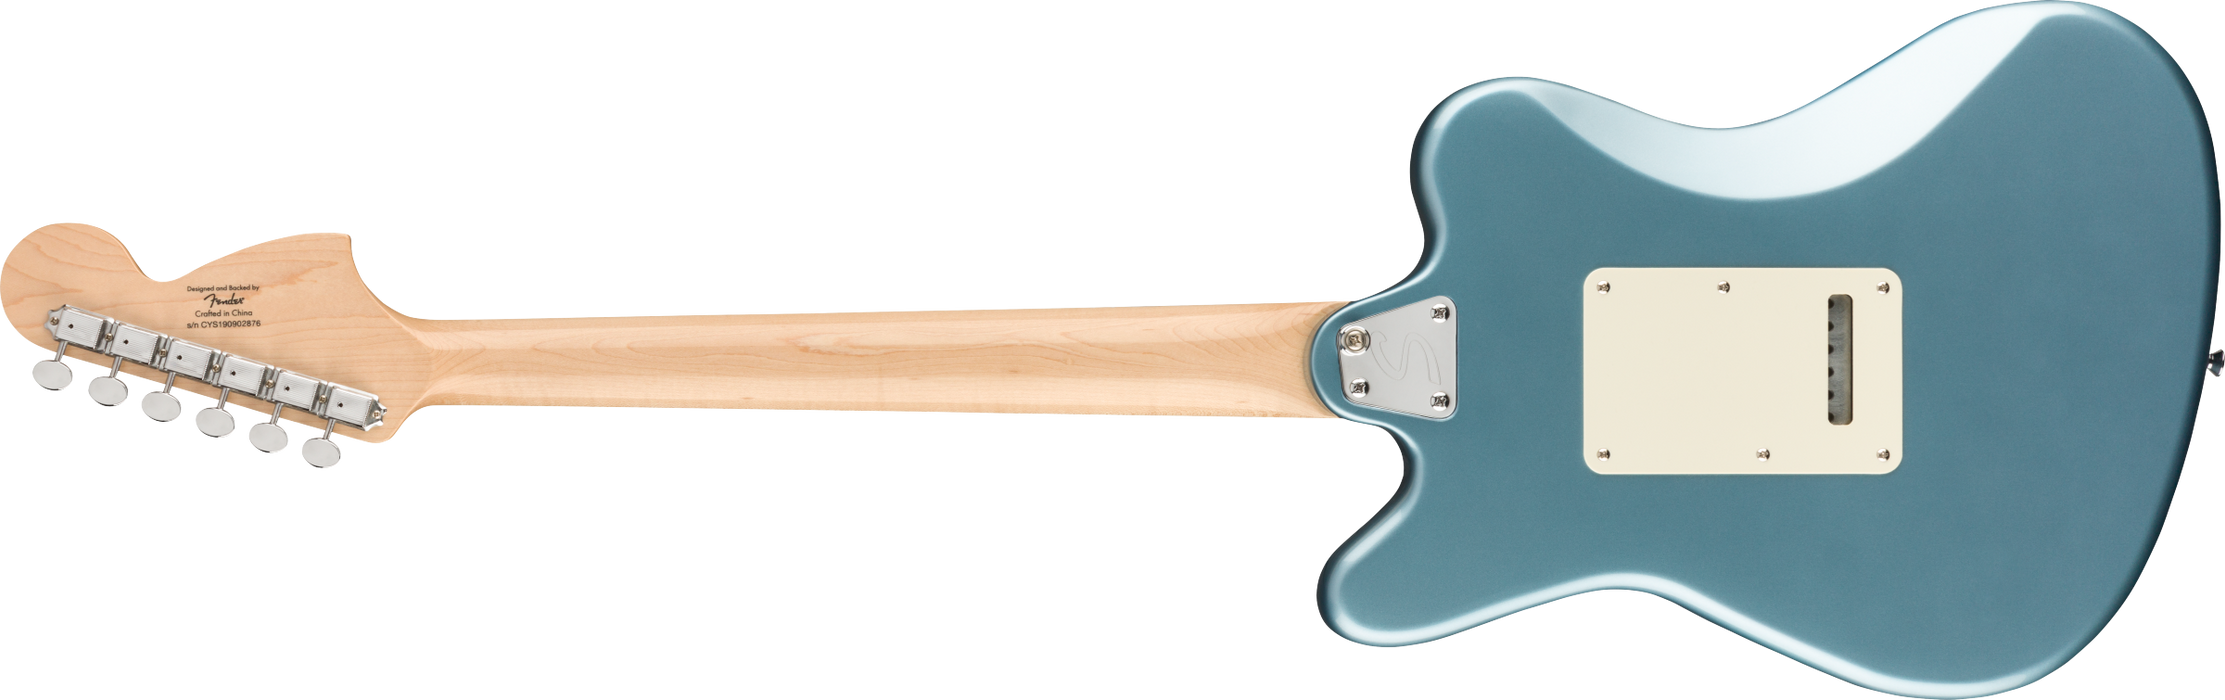 DISC - Squier Paranormal Super-Sonic Laurel Fingerboard Ice Blue Metallic Electric Guitar